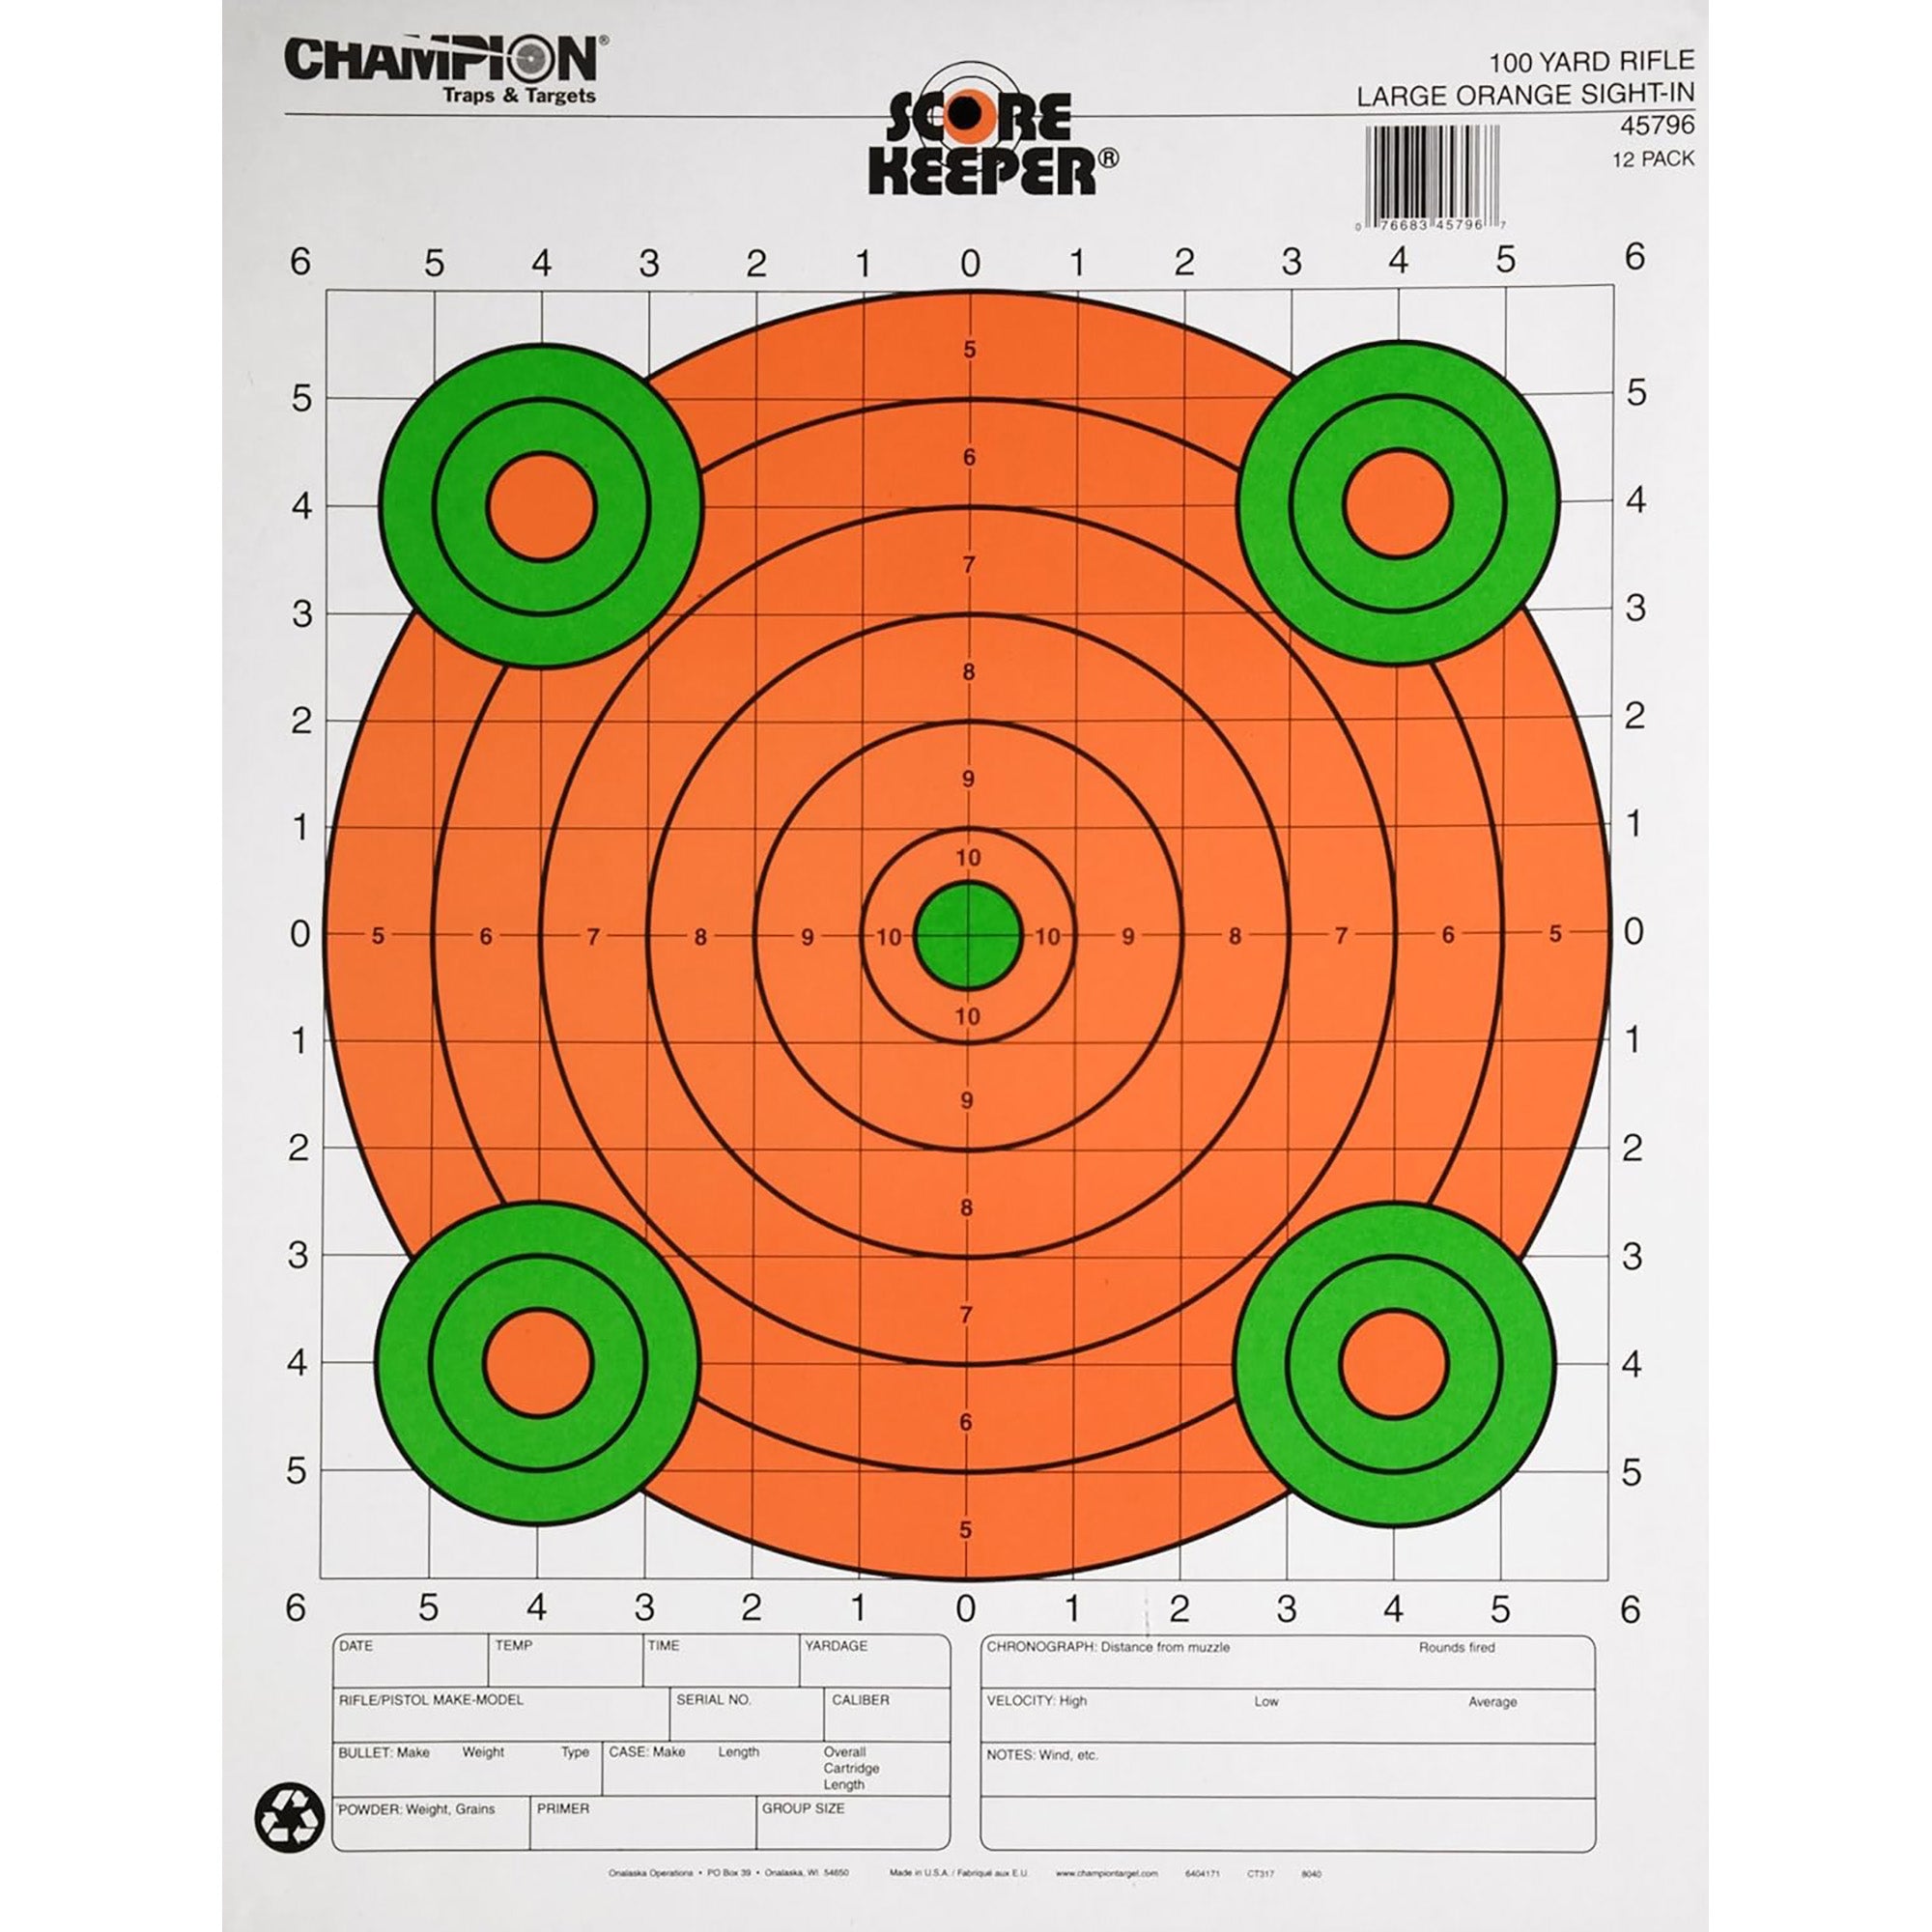 Champion Score Keeper Bull Targets 12-Pack, 100 Yd Rifle Sight-In- Orange/Green Champion